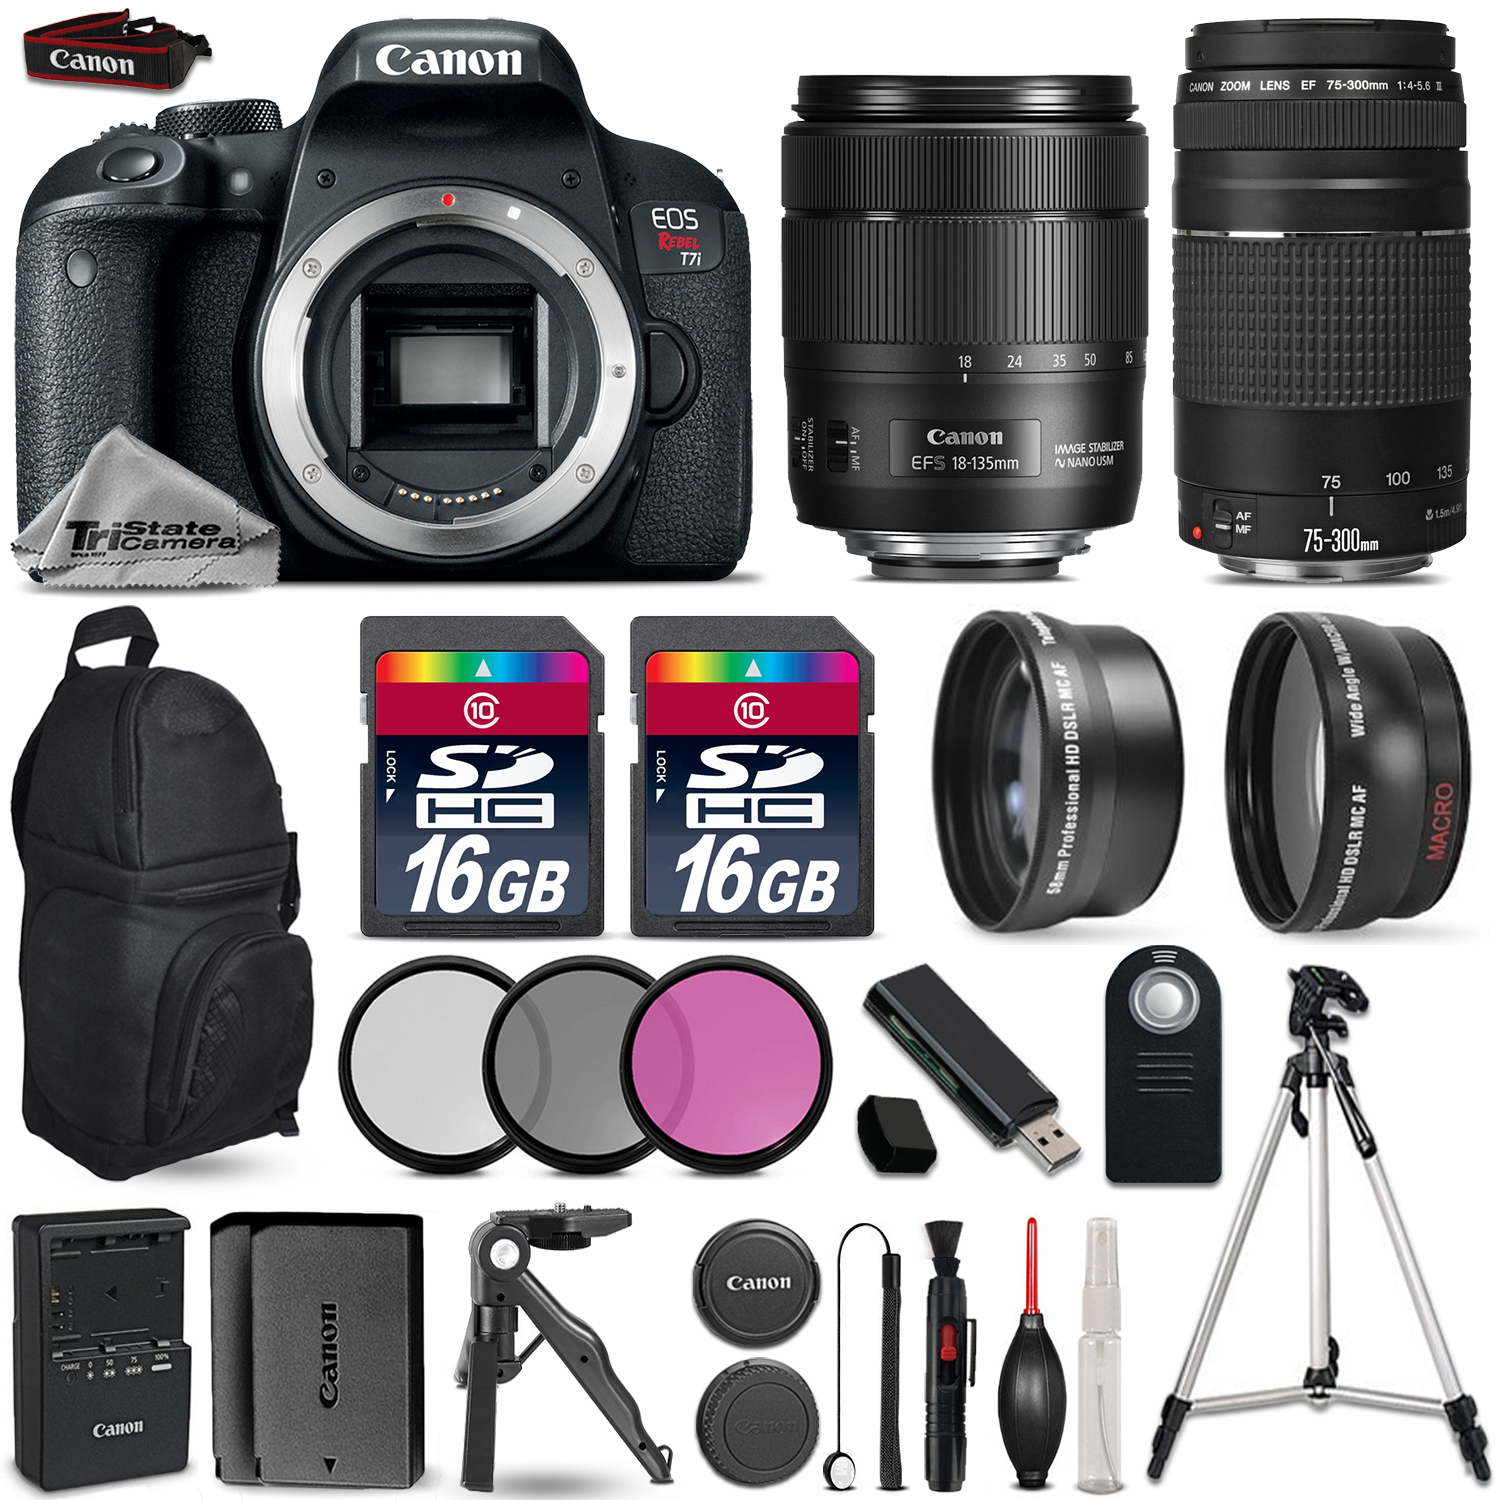 EOS Rebel T7i Camera + 18-135mm USM + 75-300mm + EXT BAT + Backpack + 32GB *FREE SHIPPING*